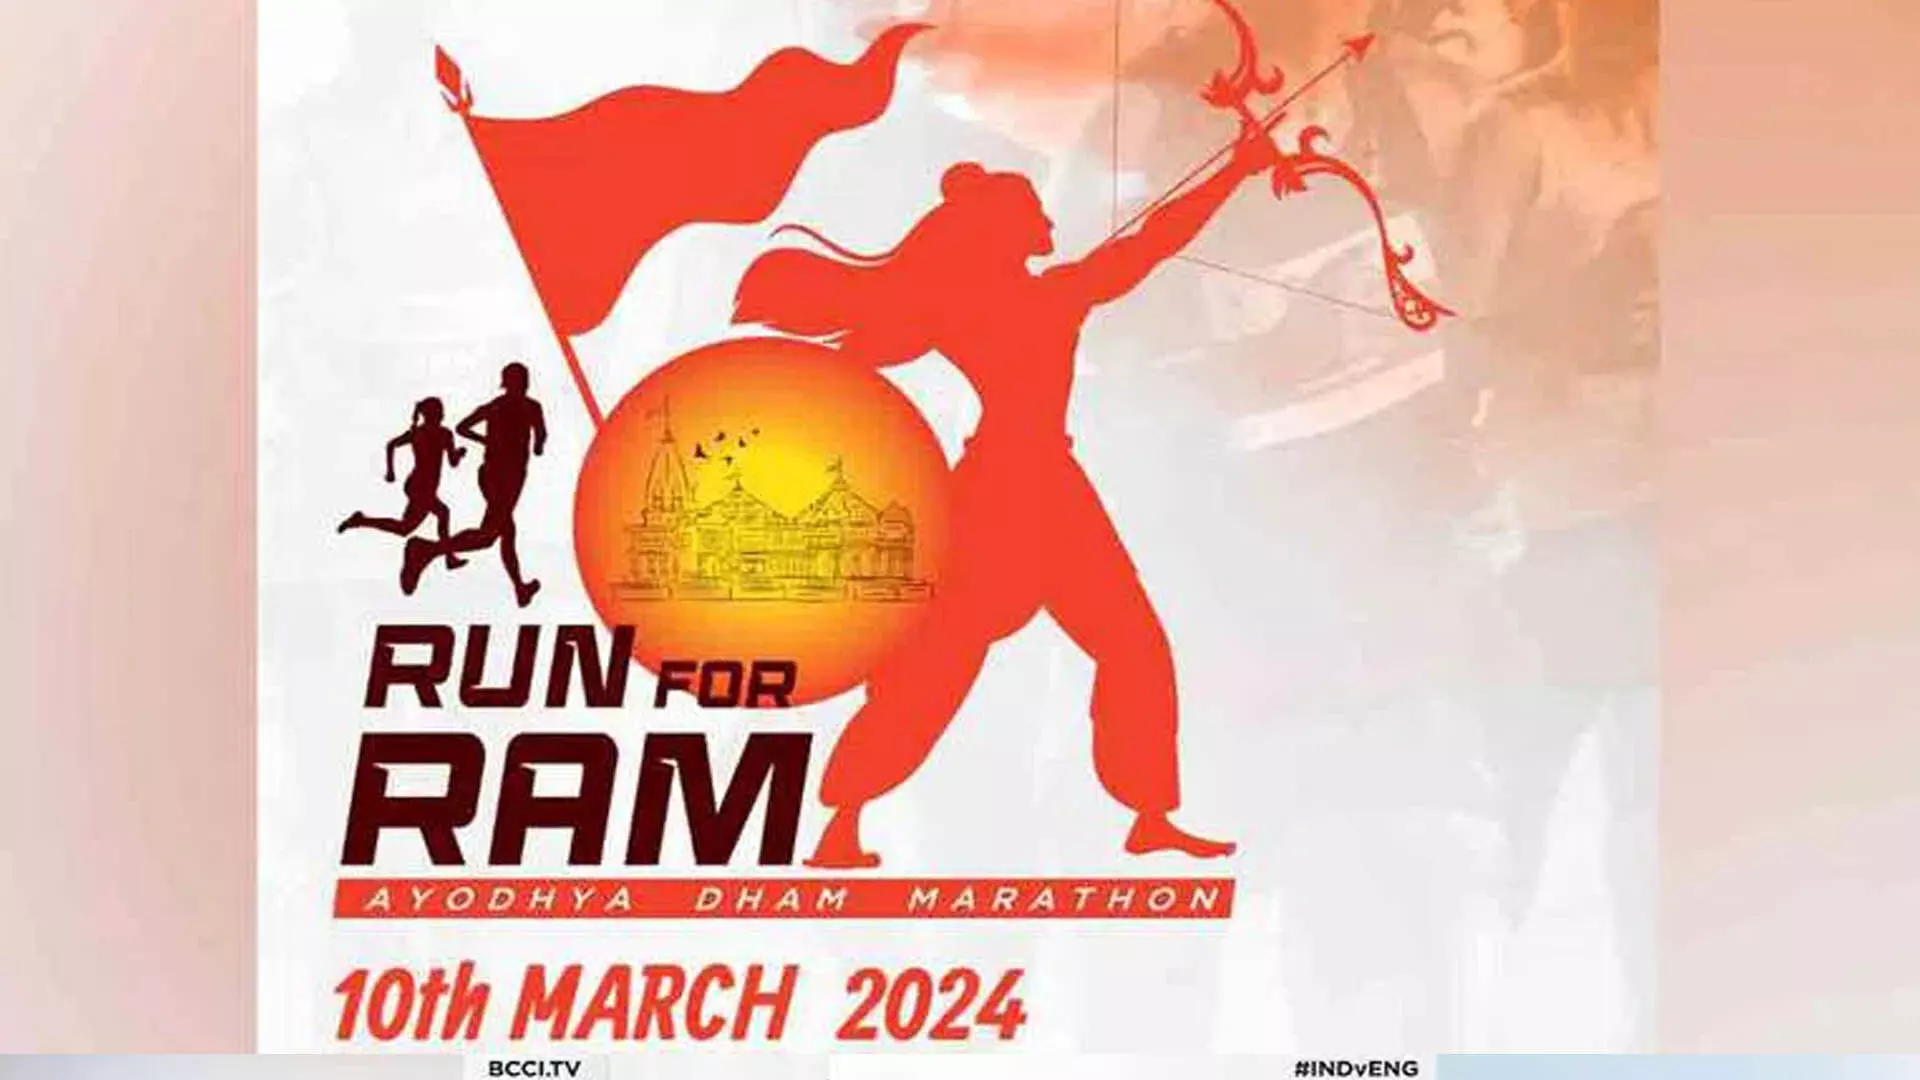 रन-फॉर-राम हाफ मैराथन 10 मार्च को अयोध्या में